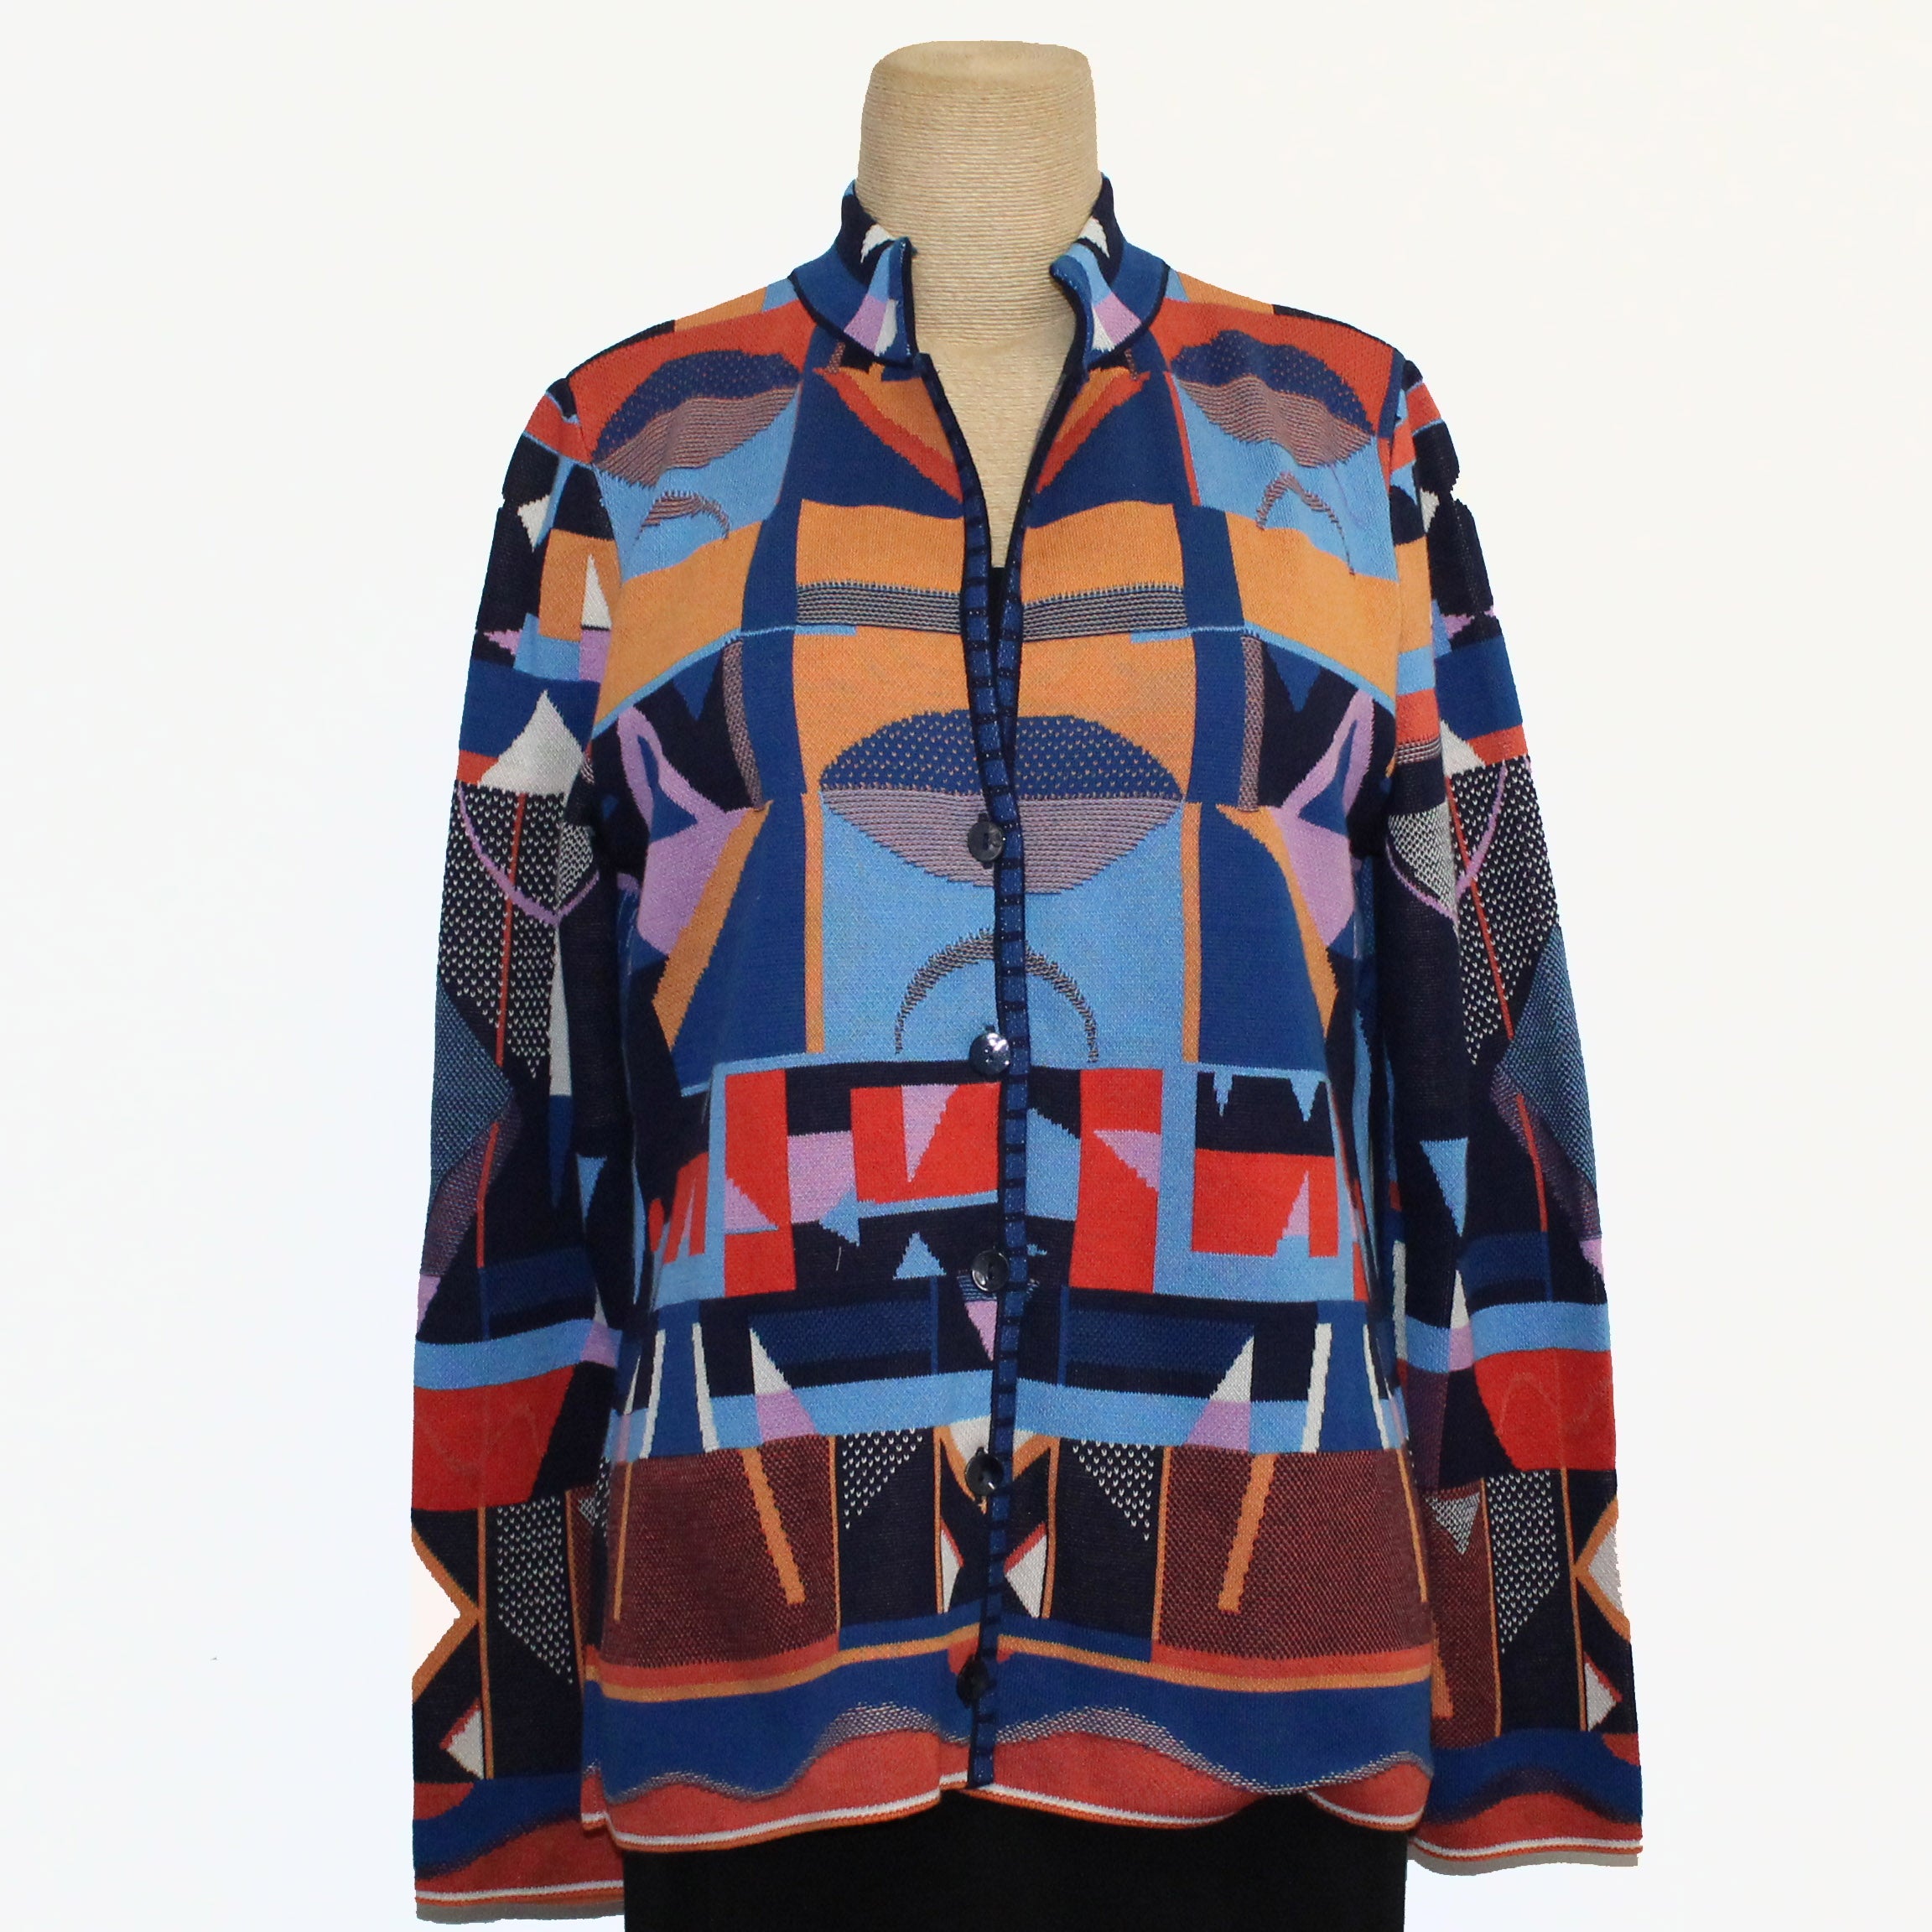 IVKO Jacket, Jacquard, Abstract Motive, Multi-Color XS